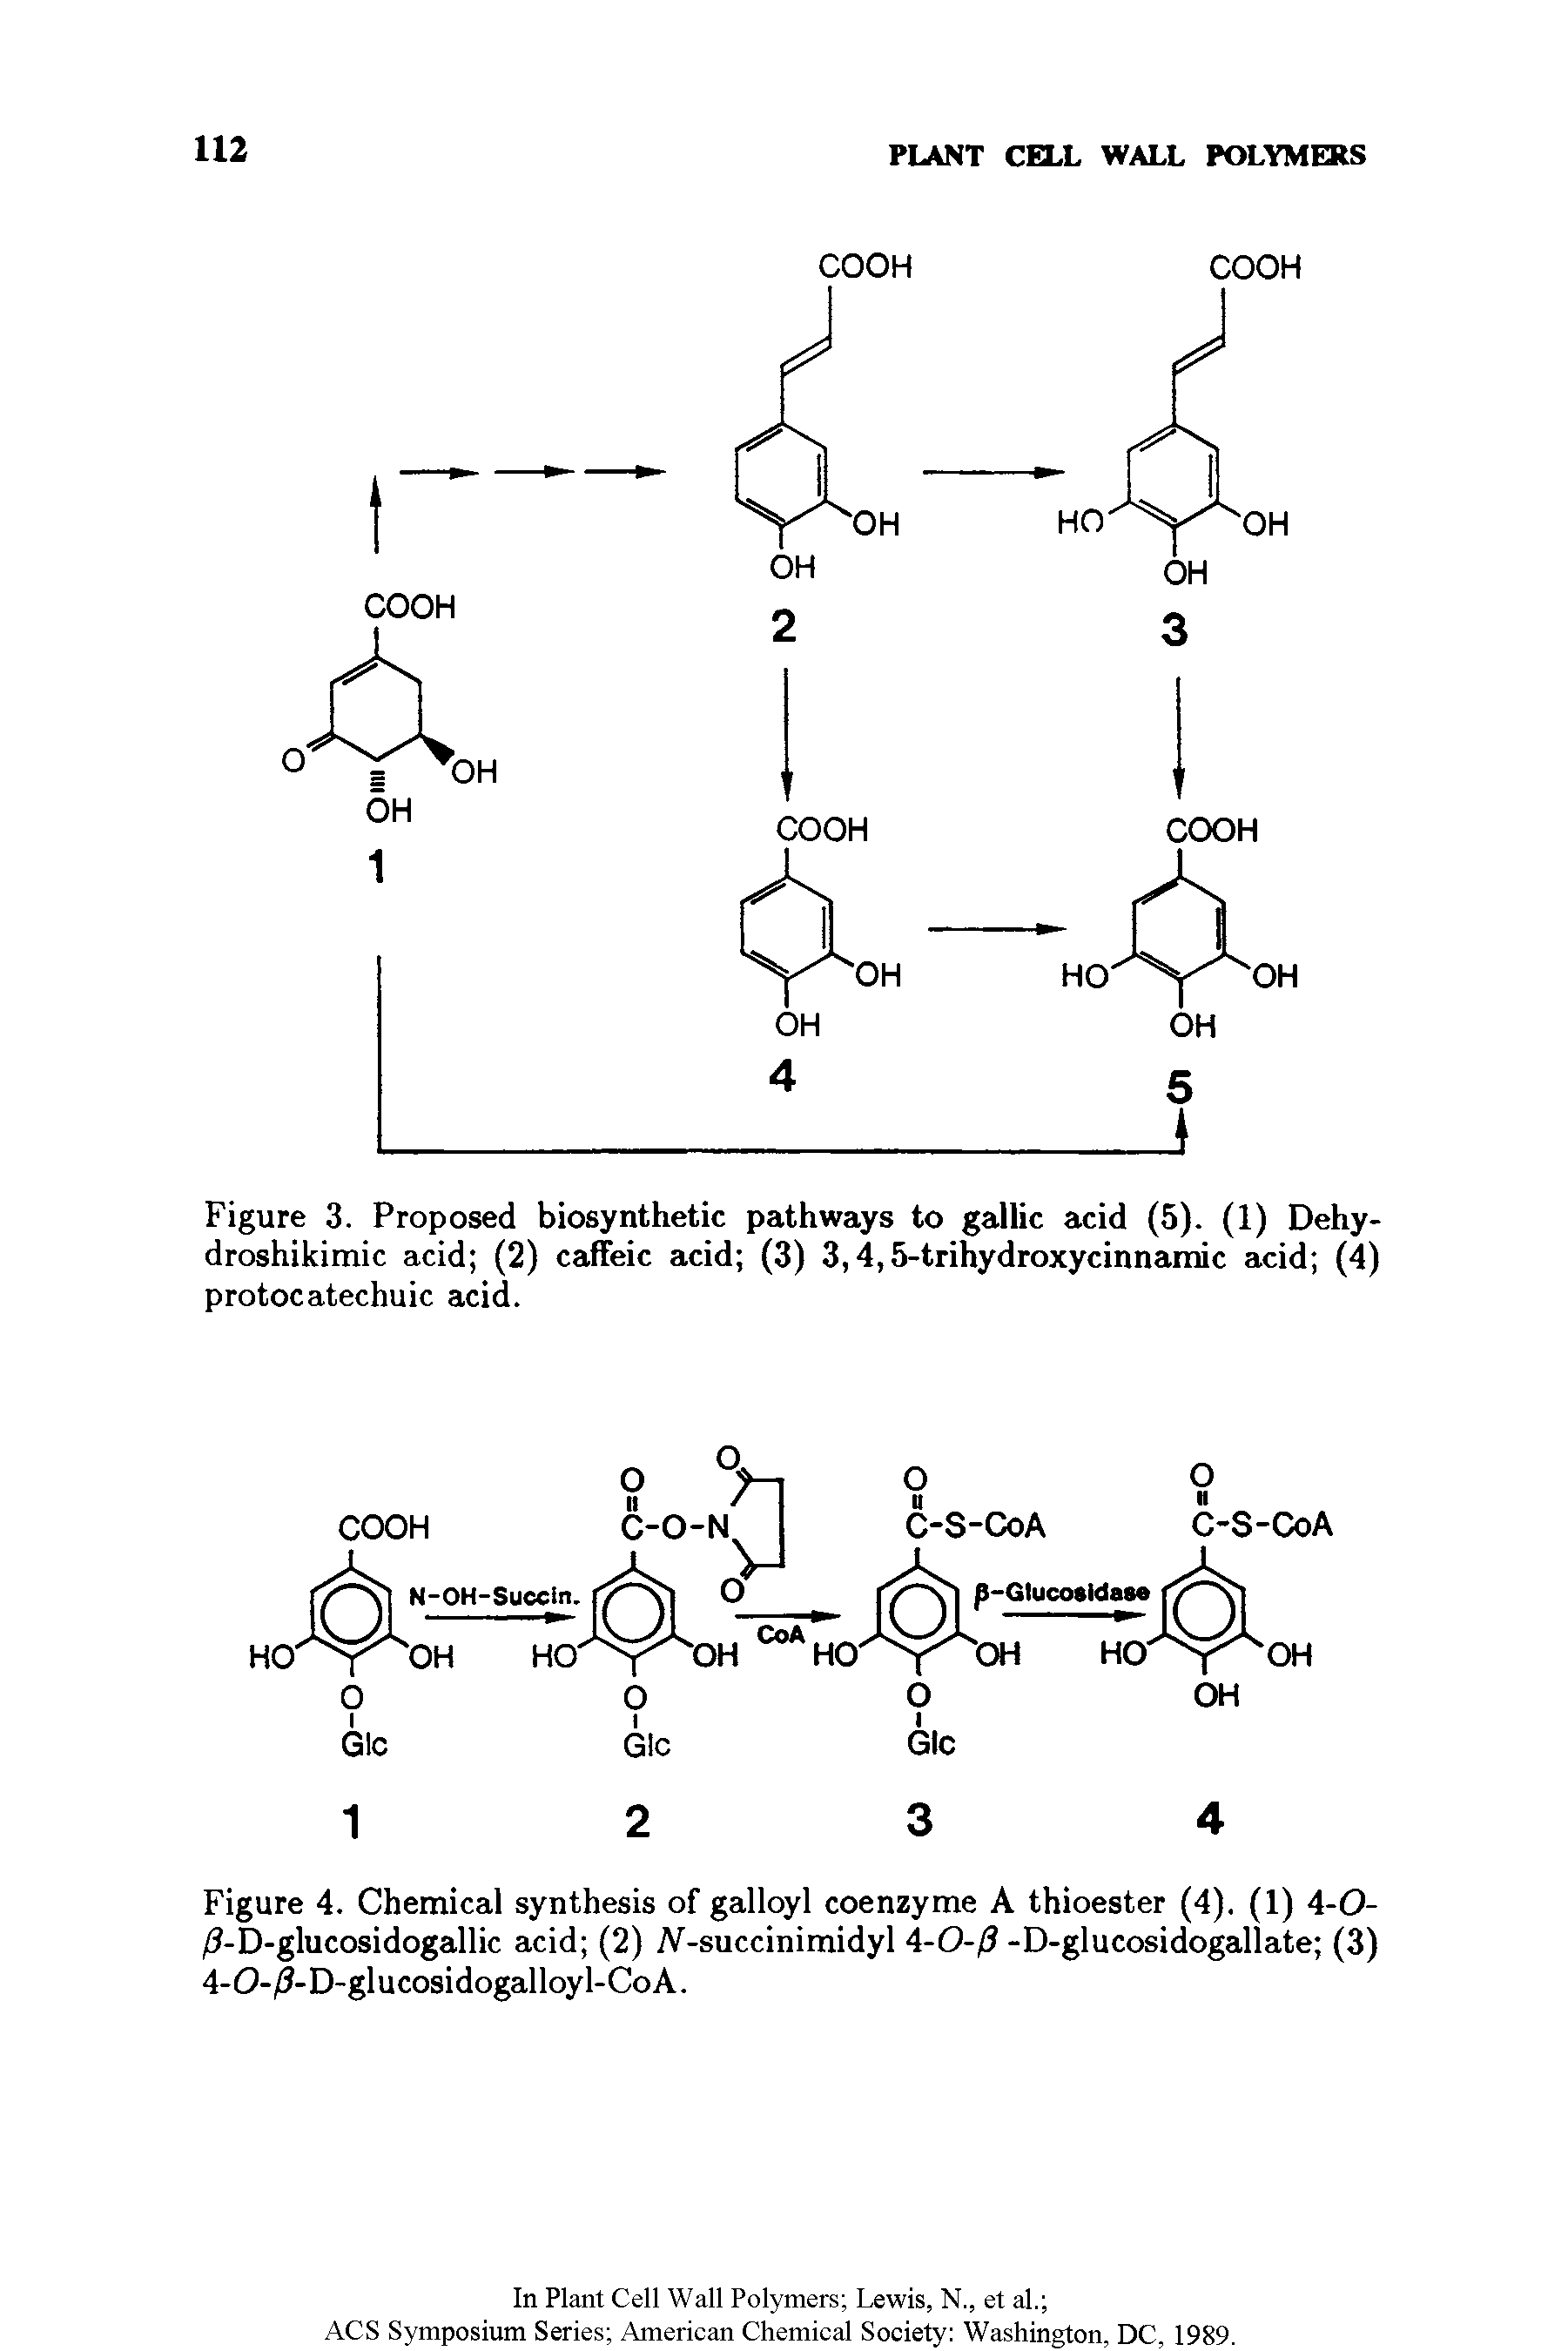 Figure 3. Proposed biosynthetic pathways to gallic acid (5). (1) Dehy-droshikimic acid (2) caffeic acid (3) 3,4,5-trihydroxycinnamic acid (4) protocatechuic acid.